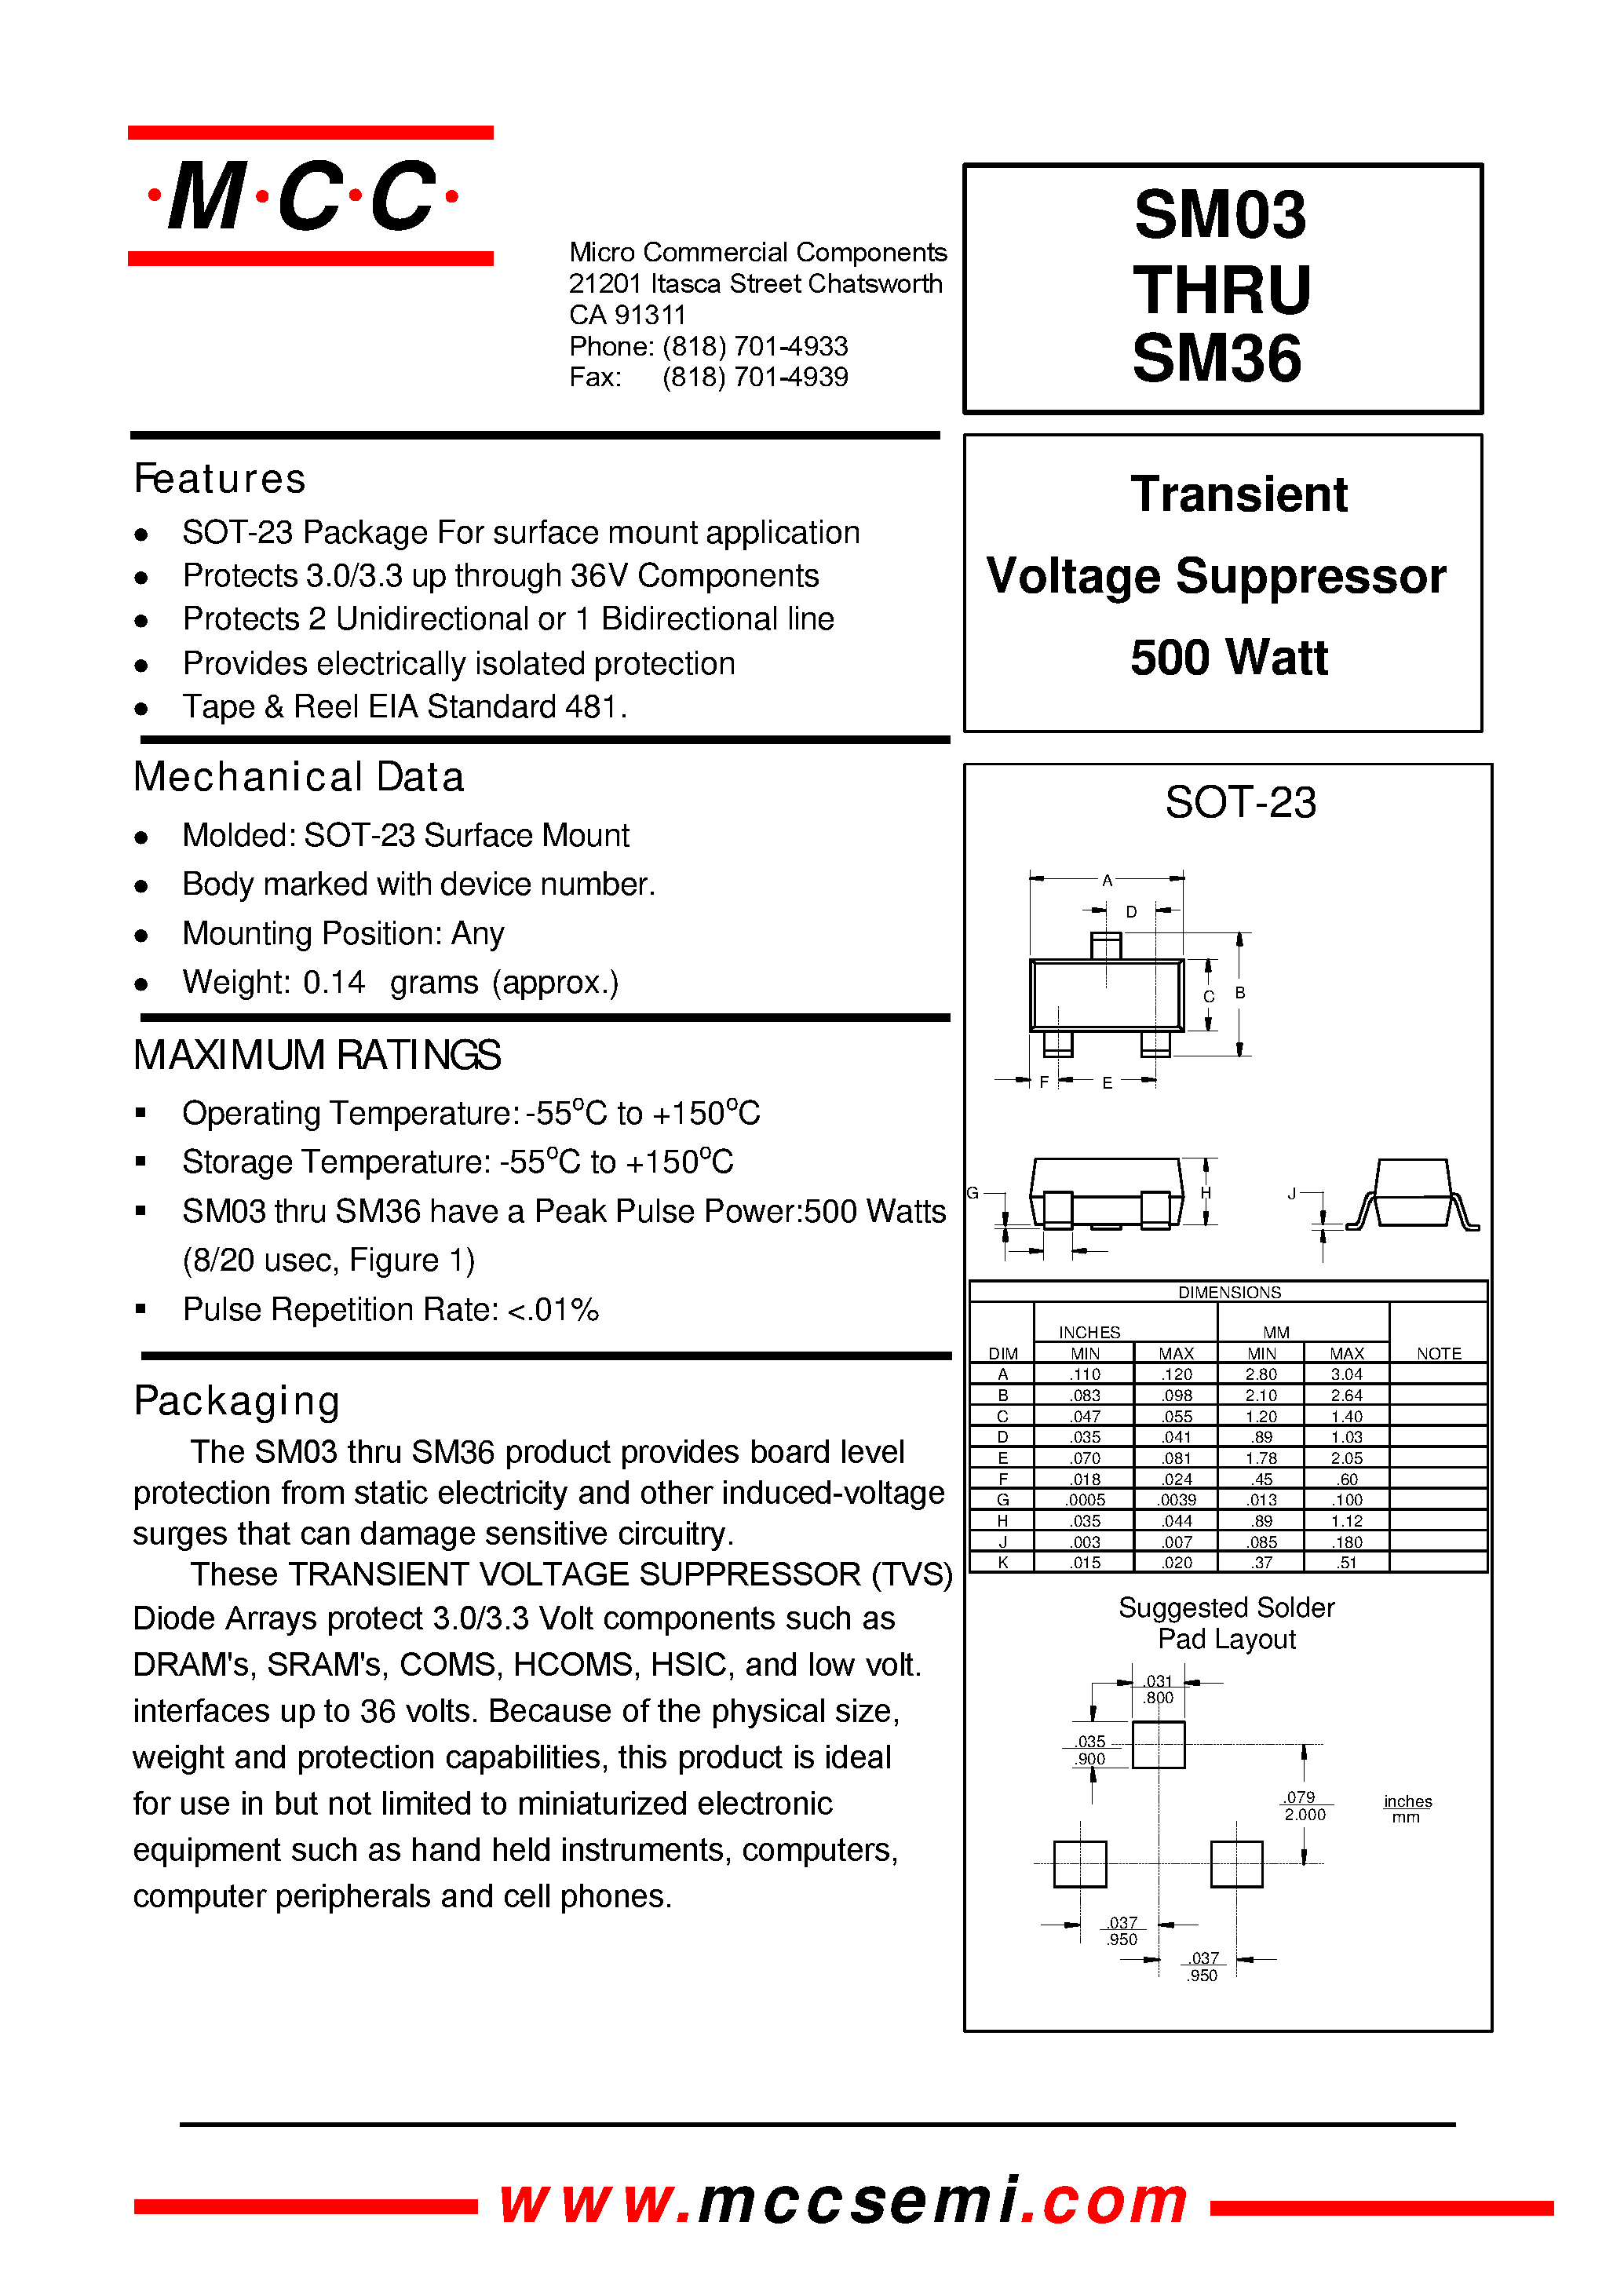 Даташит SM36 - Transient Voltage Suppressor 500 Watt страница 1